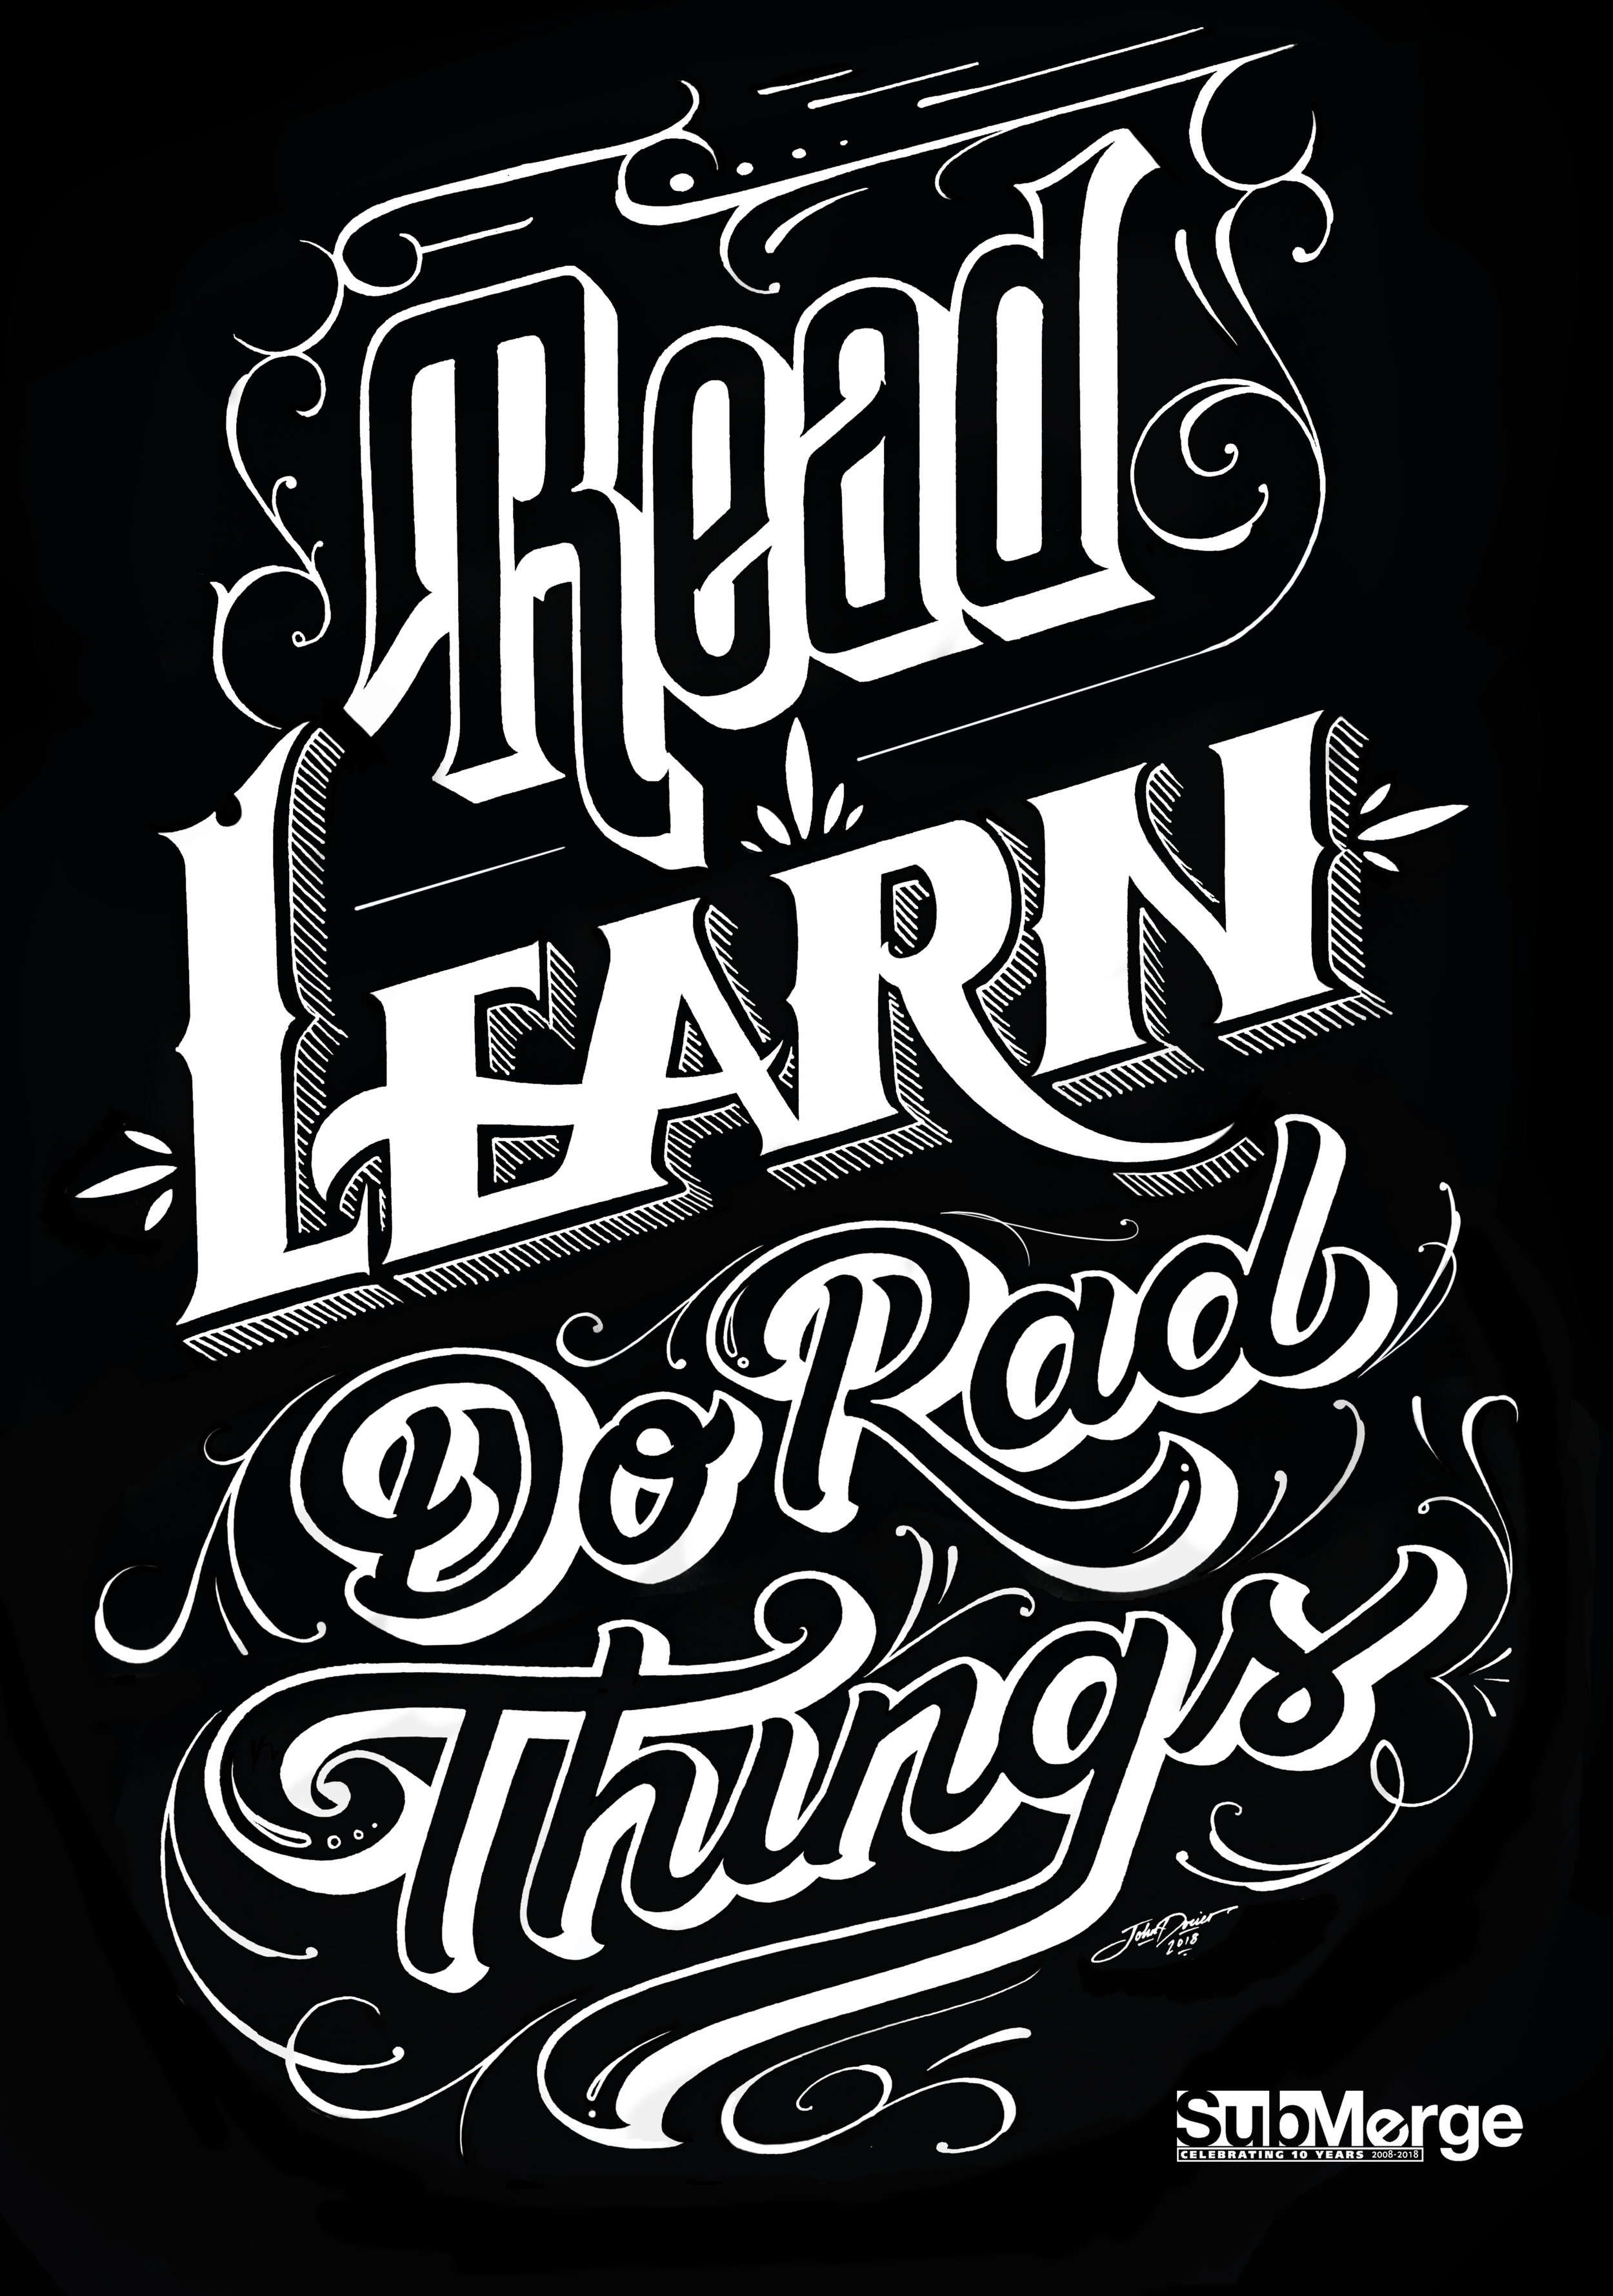 Read Learn Do Rad Things